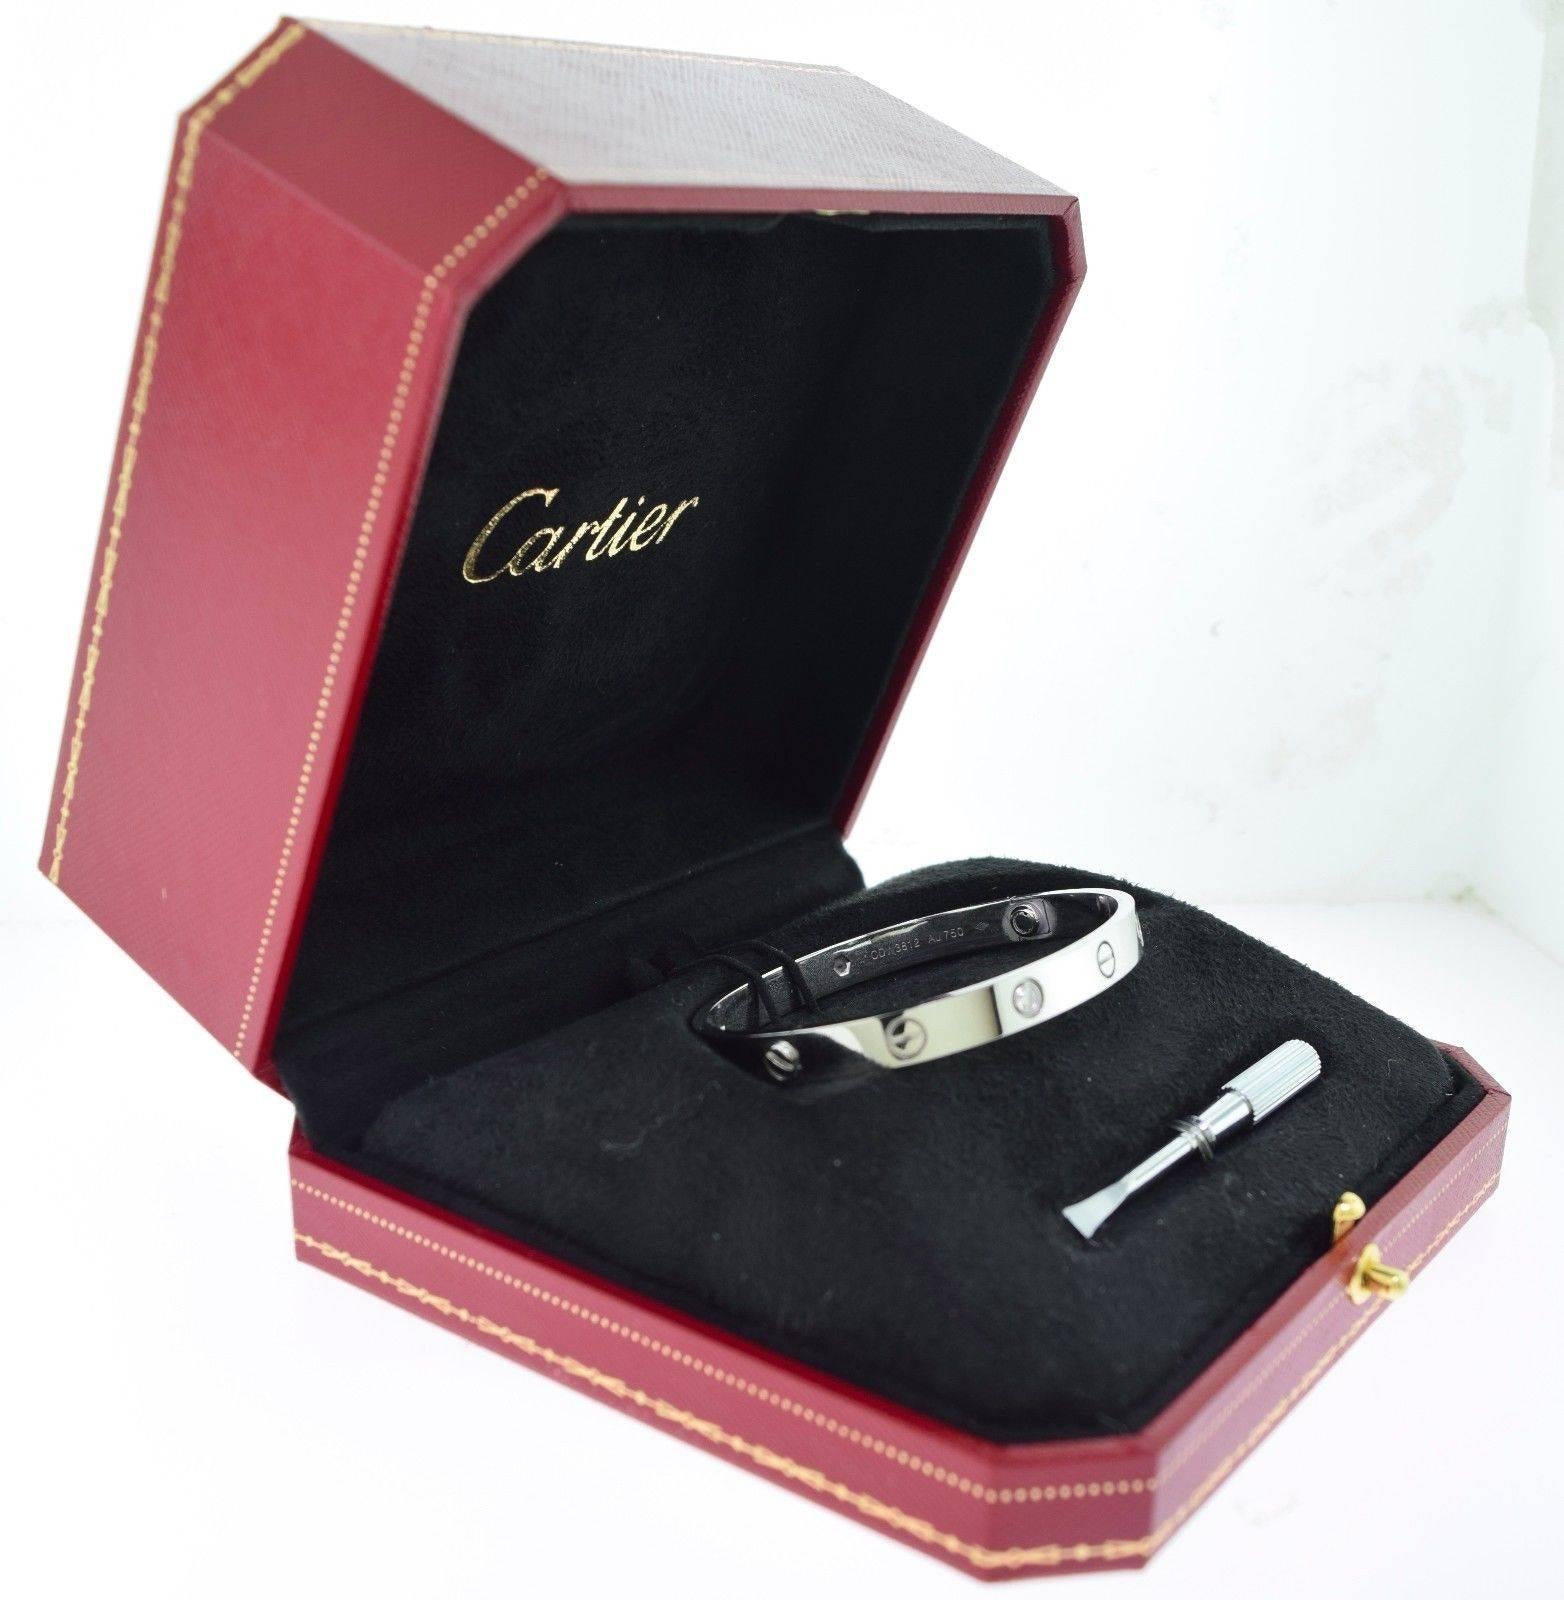 Brand: Cartier
Series: Love
Metal: 18k White Gold
Stones: 4 Brilliant Cut Round Diamonds
Size: 17
Item Weight: 31.2 grams
Screw: New Screw
Hallmark: Cartier 750 17  Serial Number

Item includes Box & Screwdriver